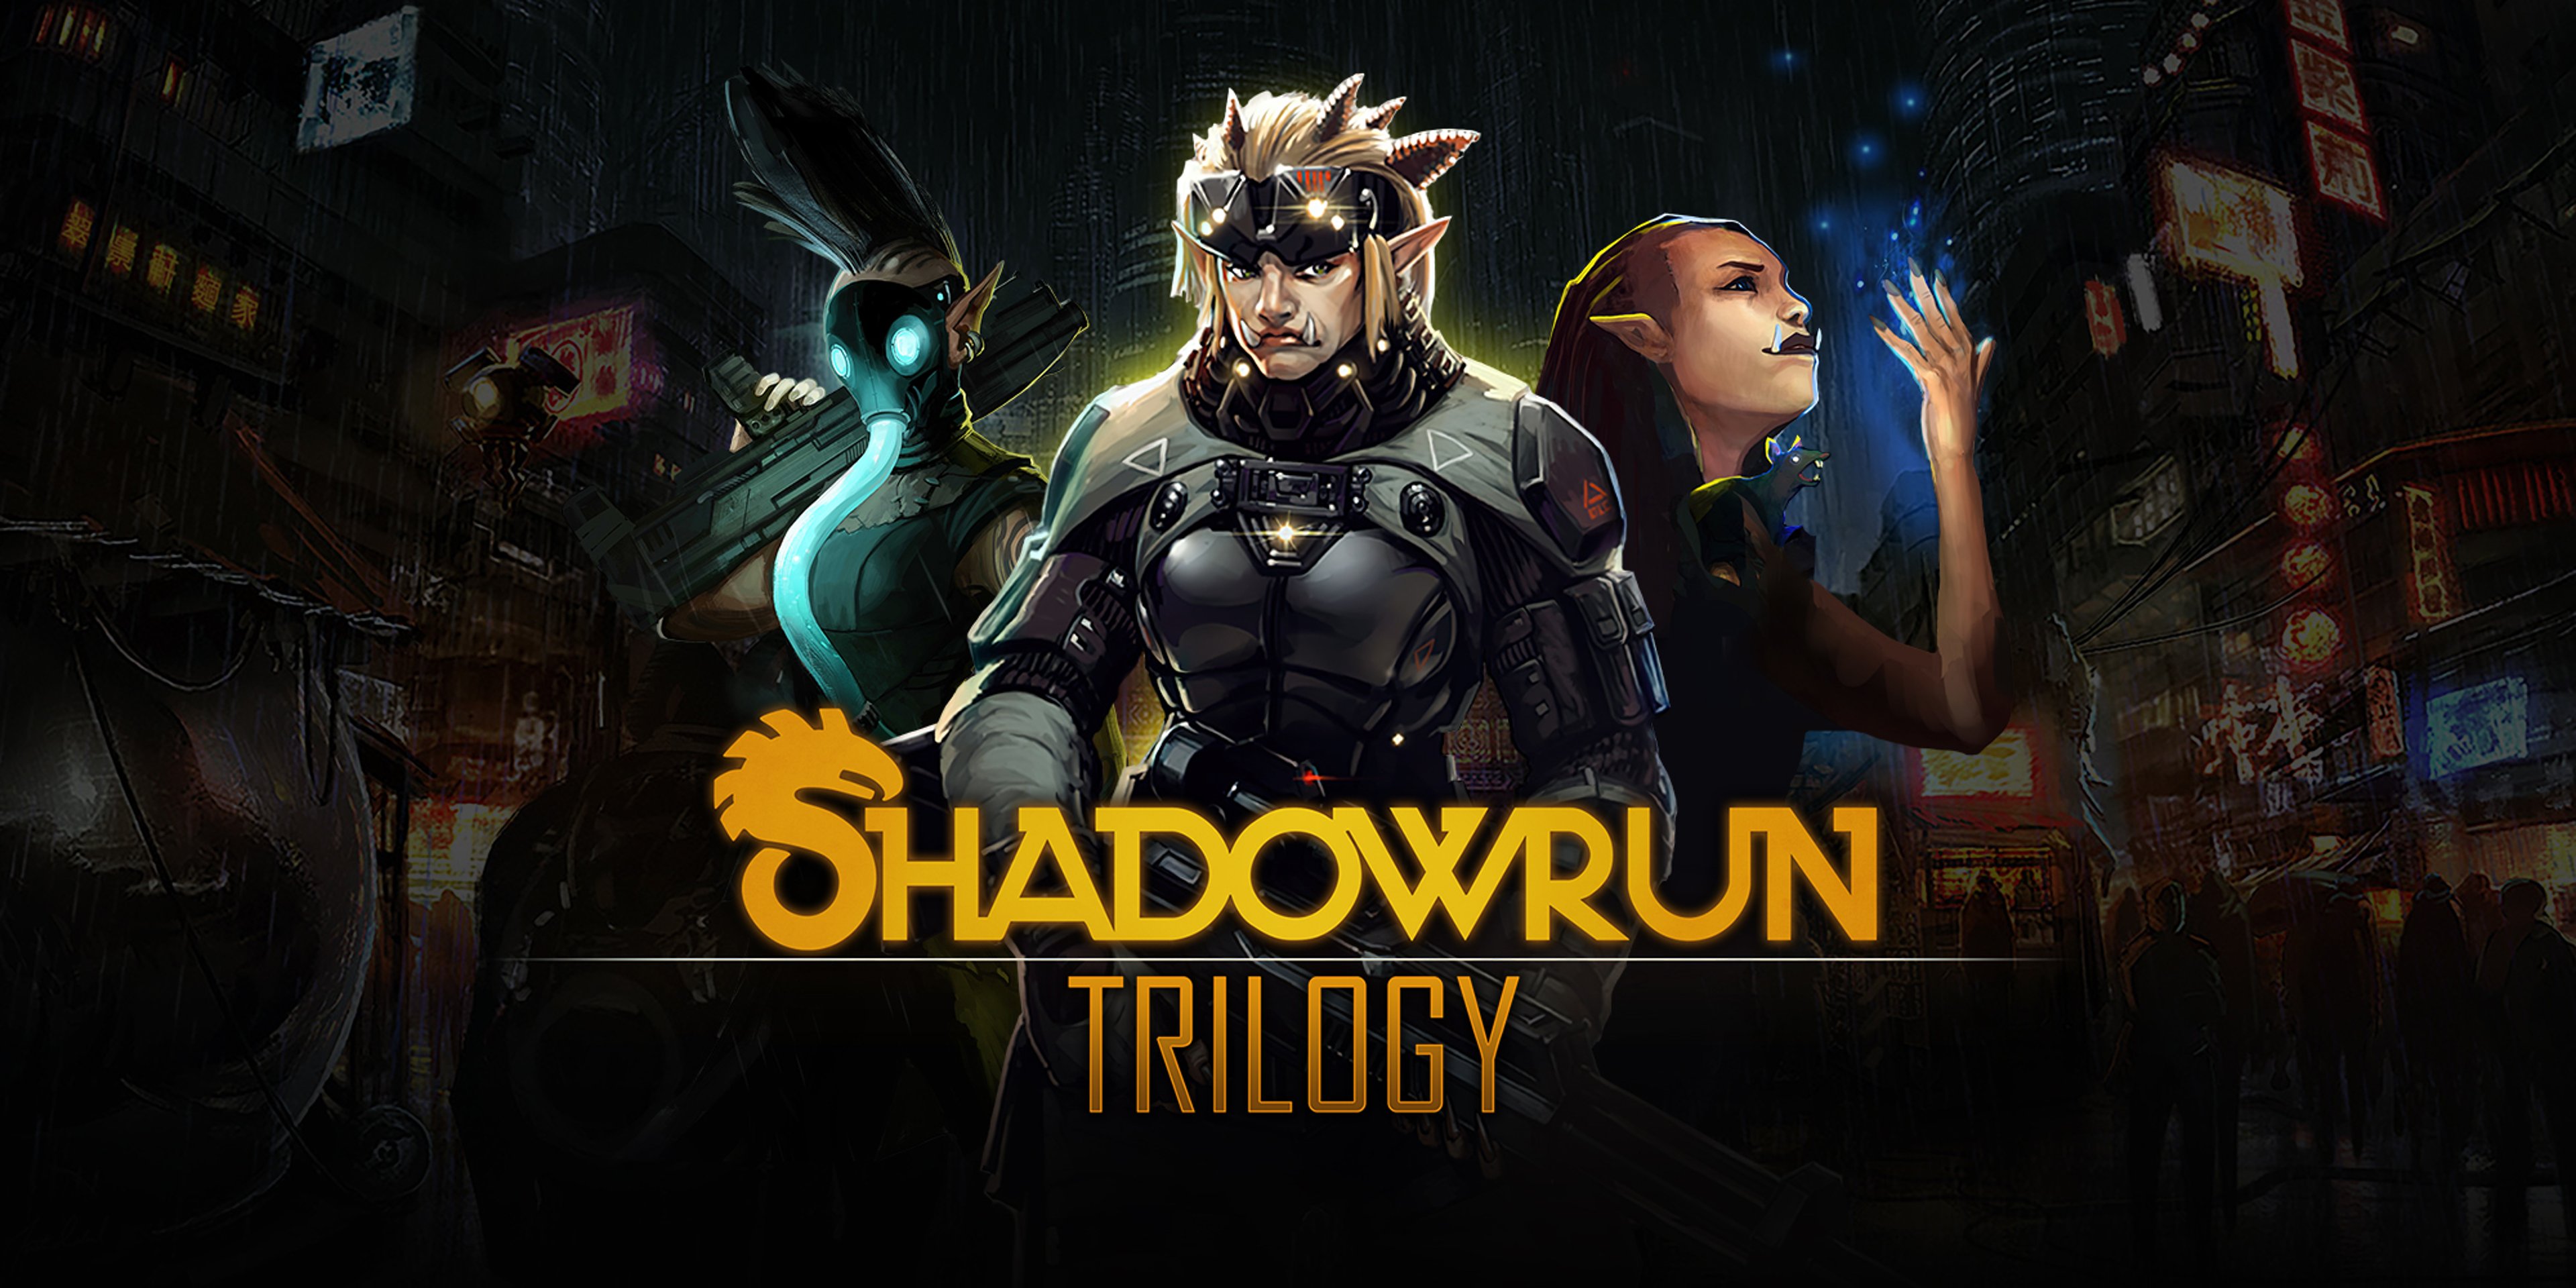 Shadowrun Trilogy: in arrivo la serie su console